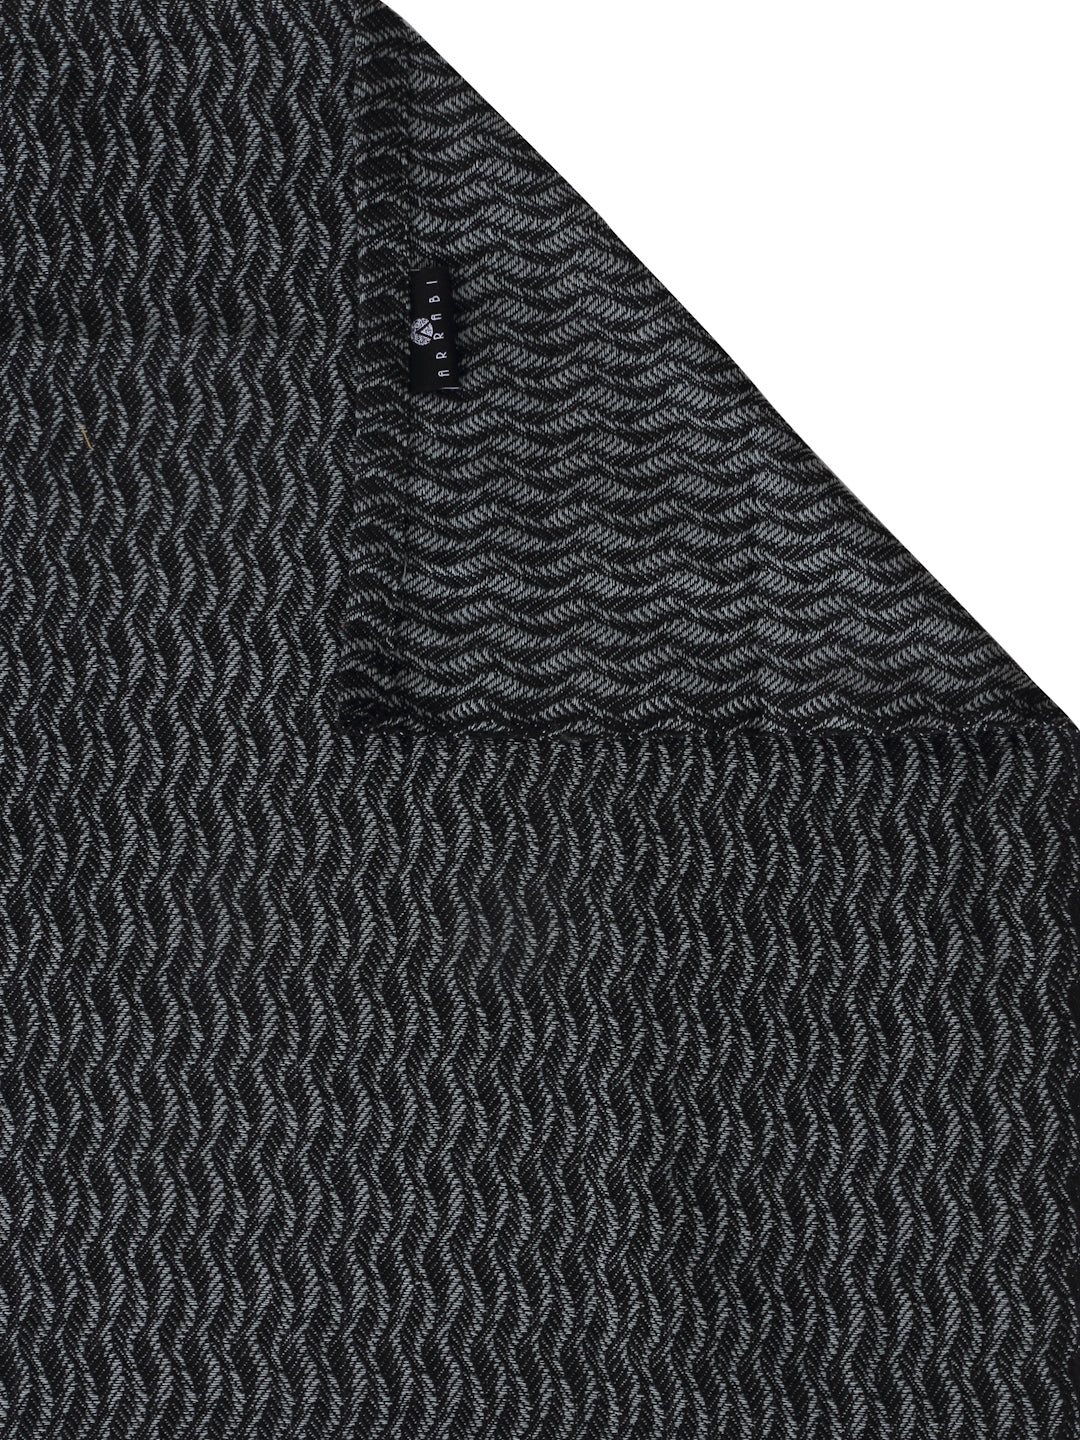 Arrabi Black Stripes Handwoven Cotton Super King Size Bedsheet with 2 Pillow Covers (270 X 270 cm)